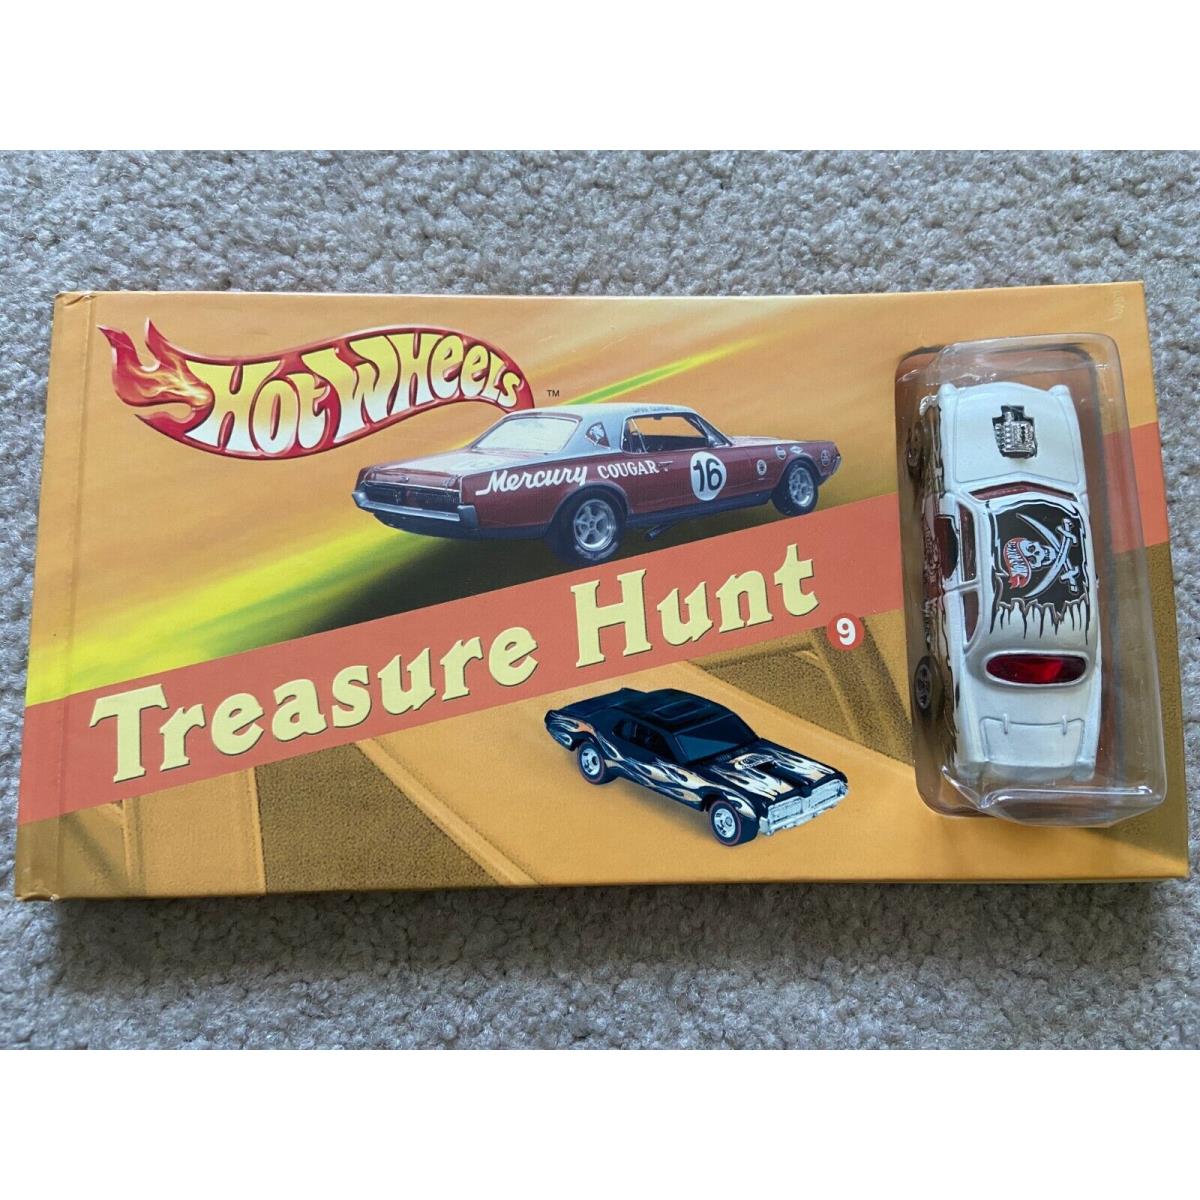 Treasure Hunt Hot Wheels Book and Car - Plastic Blister